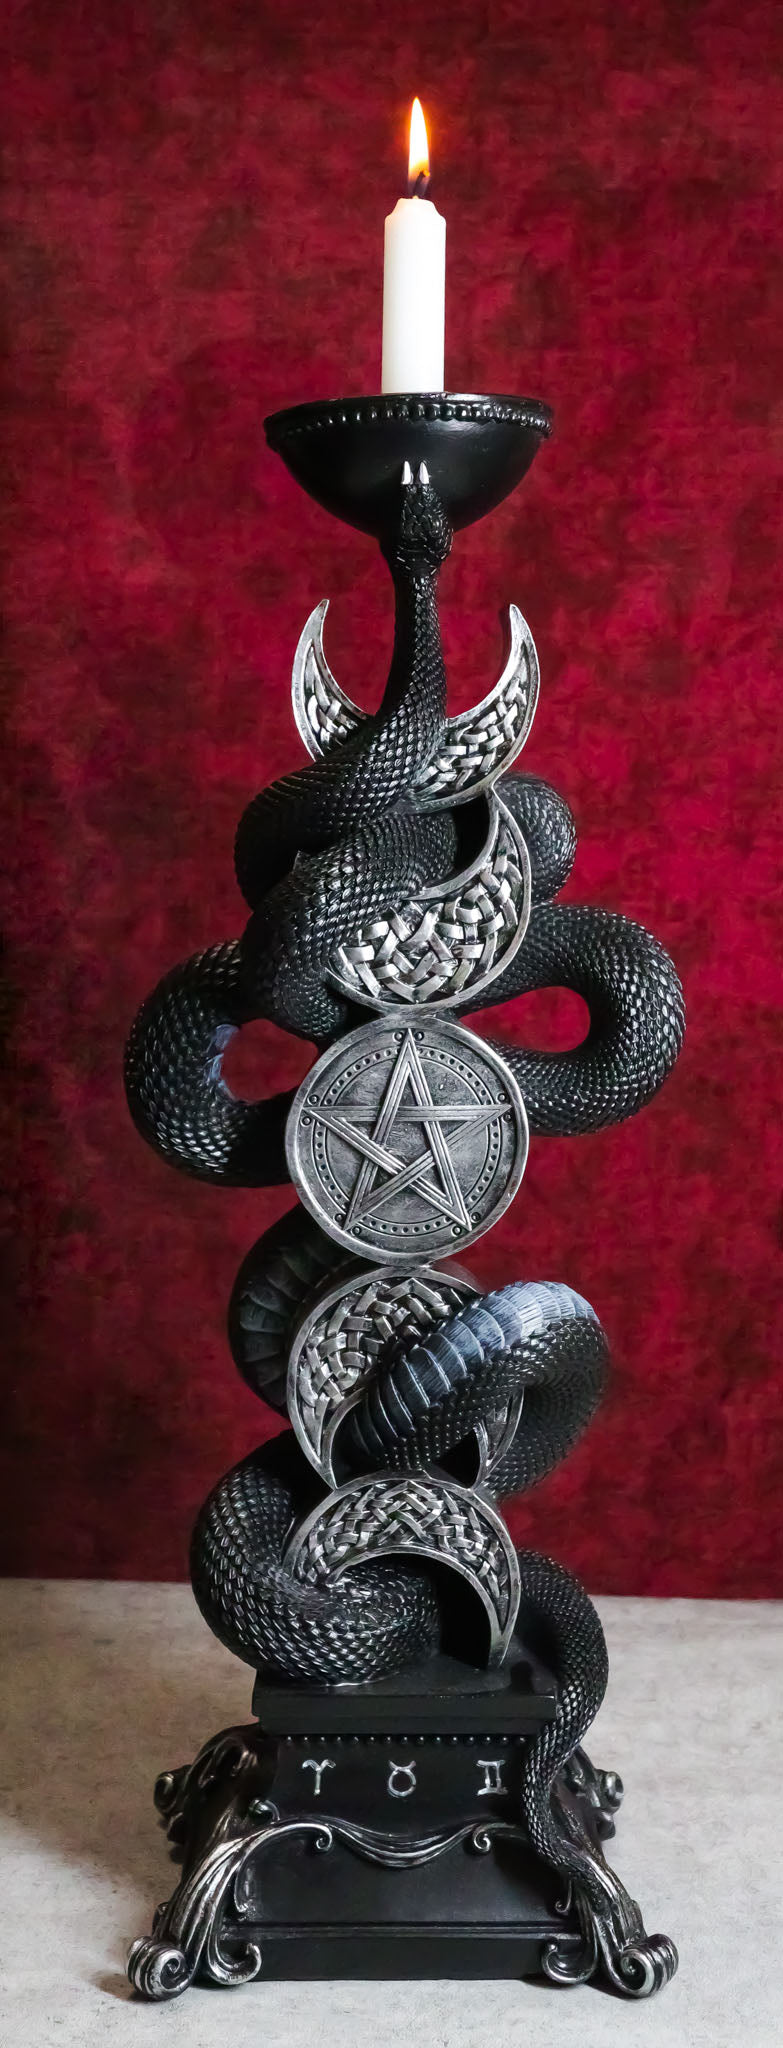 Wicca Triple Moon Pentagram Insignia Black Viper Snake Taper Candle Holder Decor